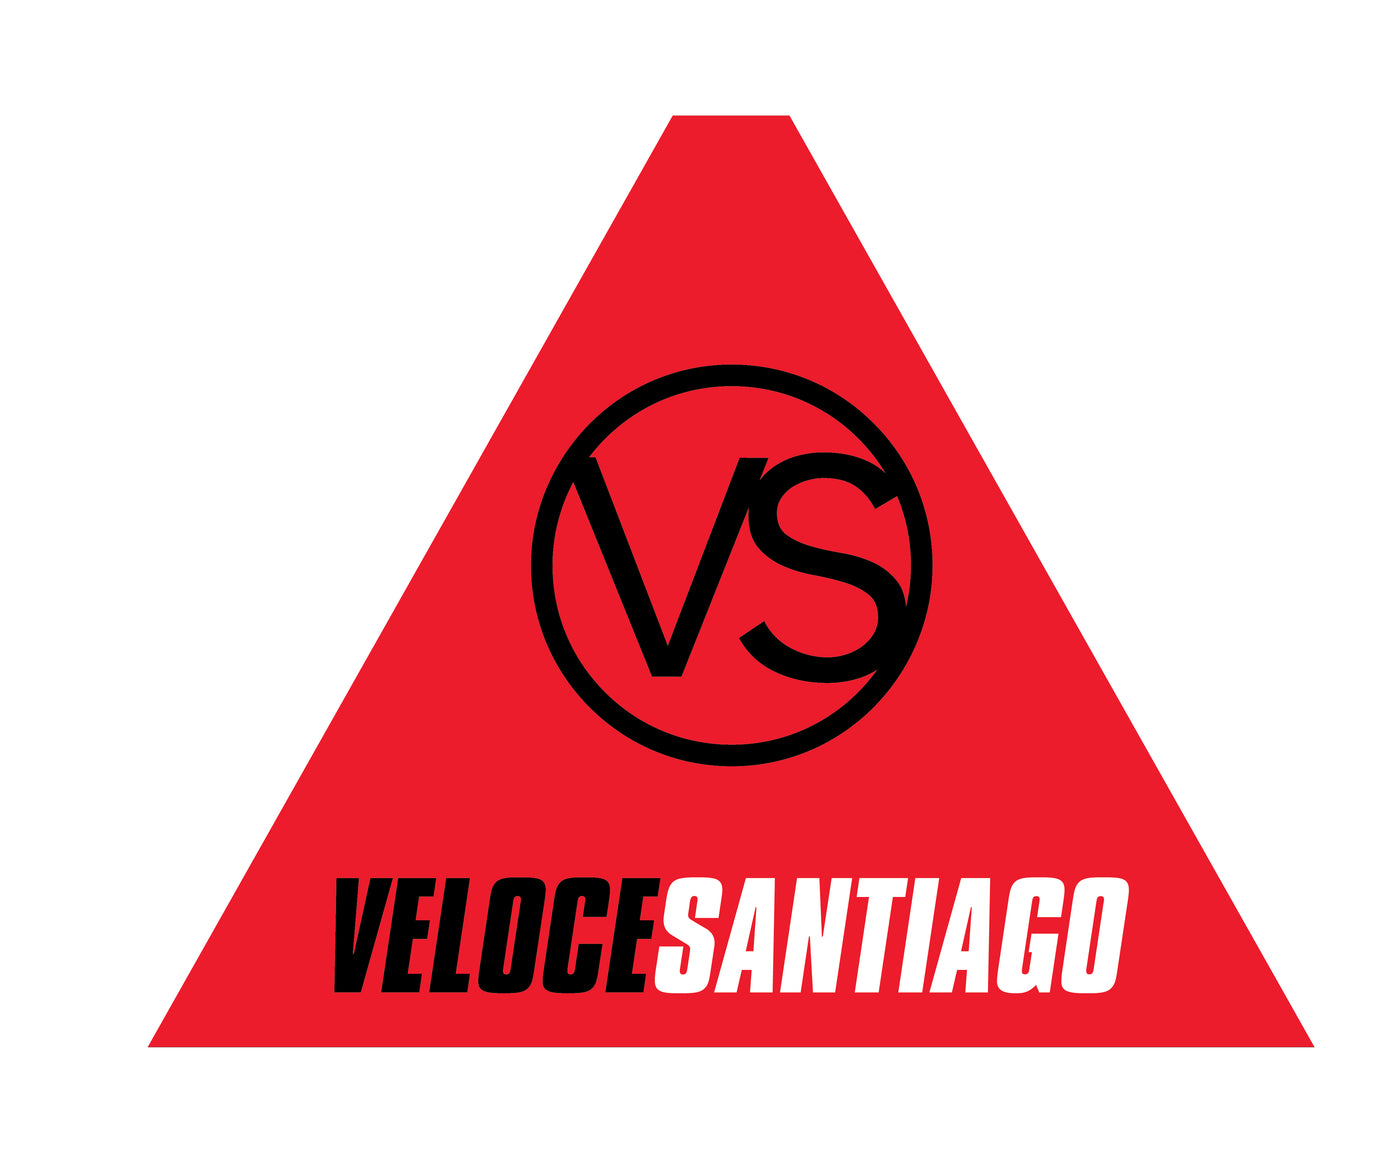 Veloce Santiago Bike Rack Banners (Set of 2 Mesh Banners)